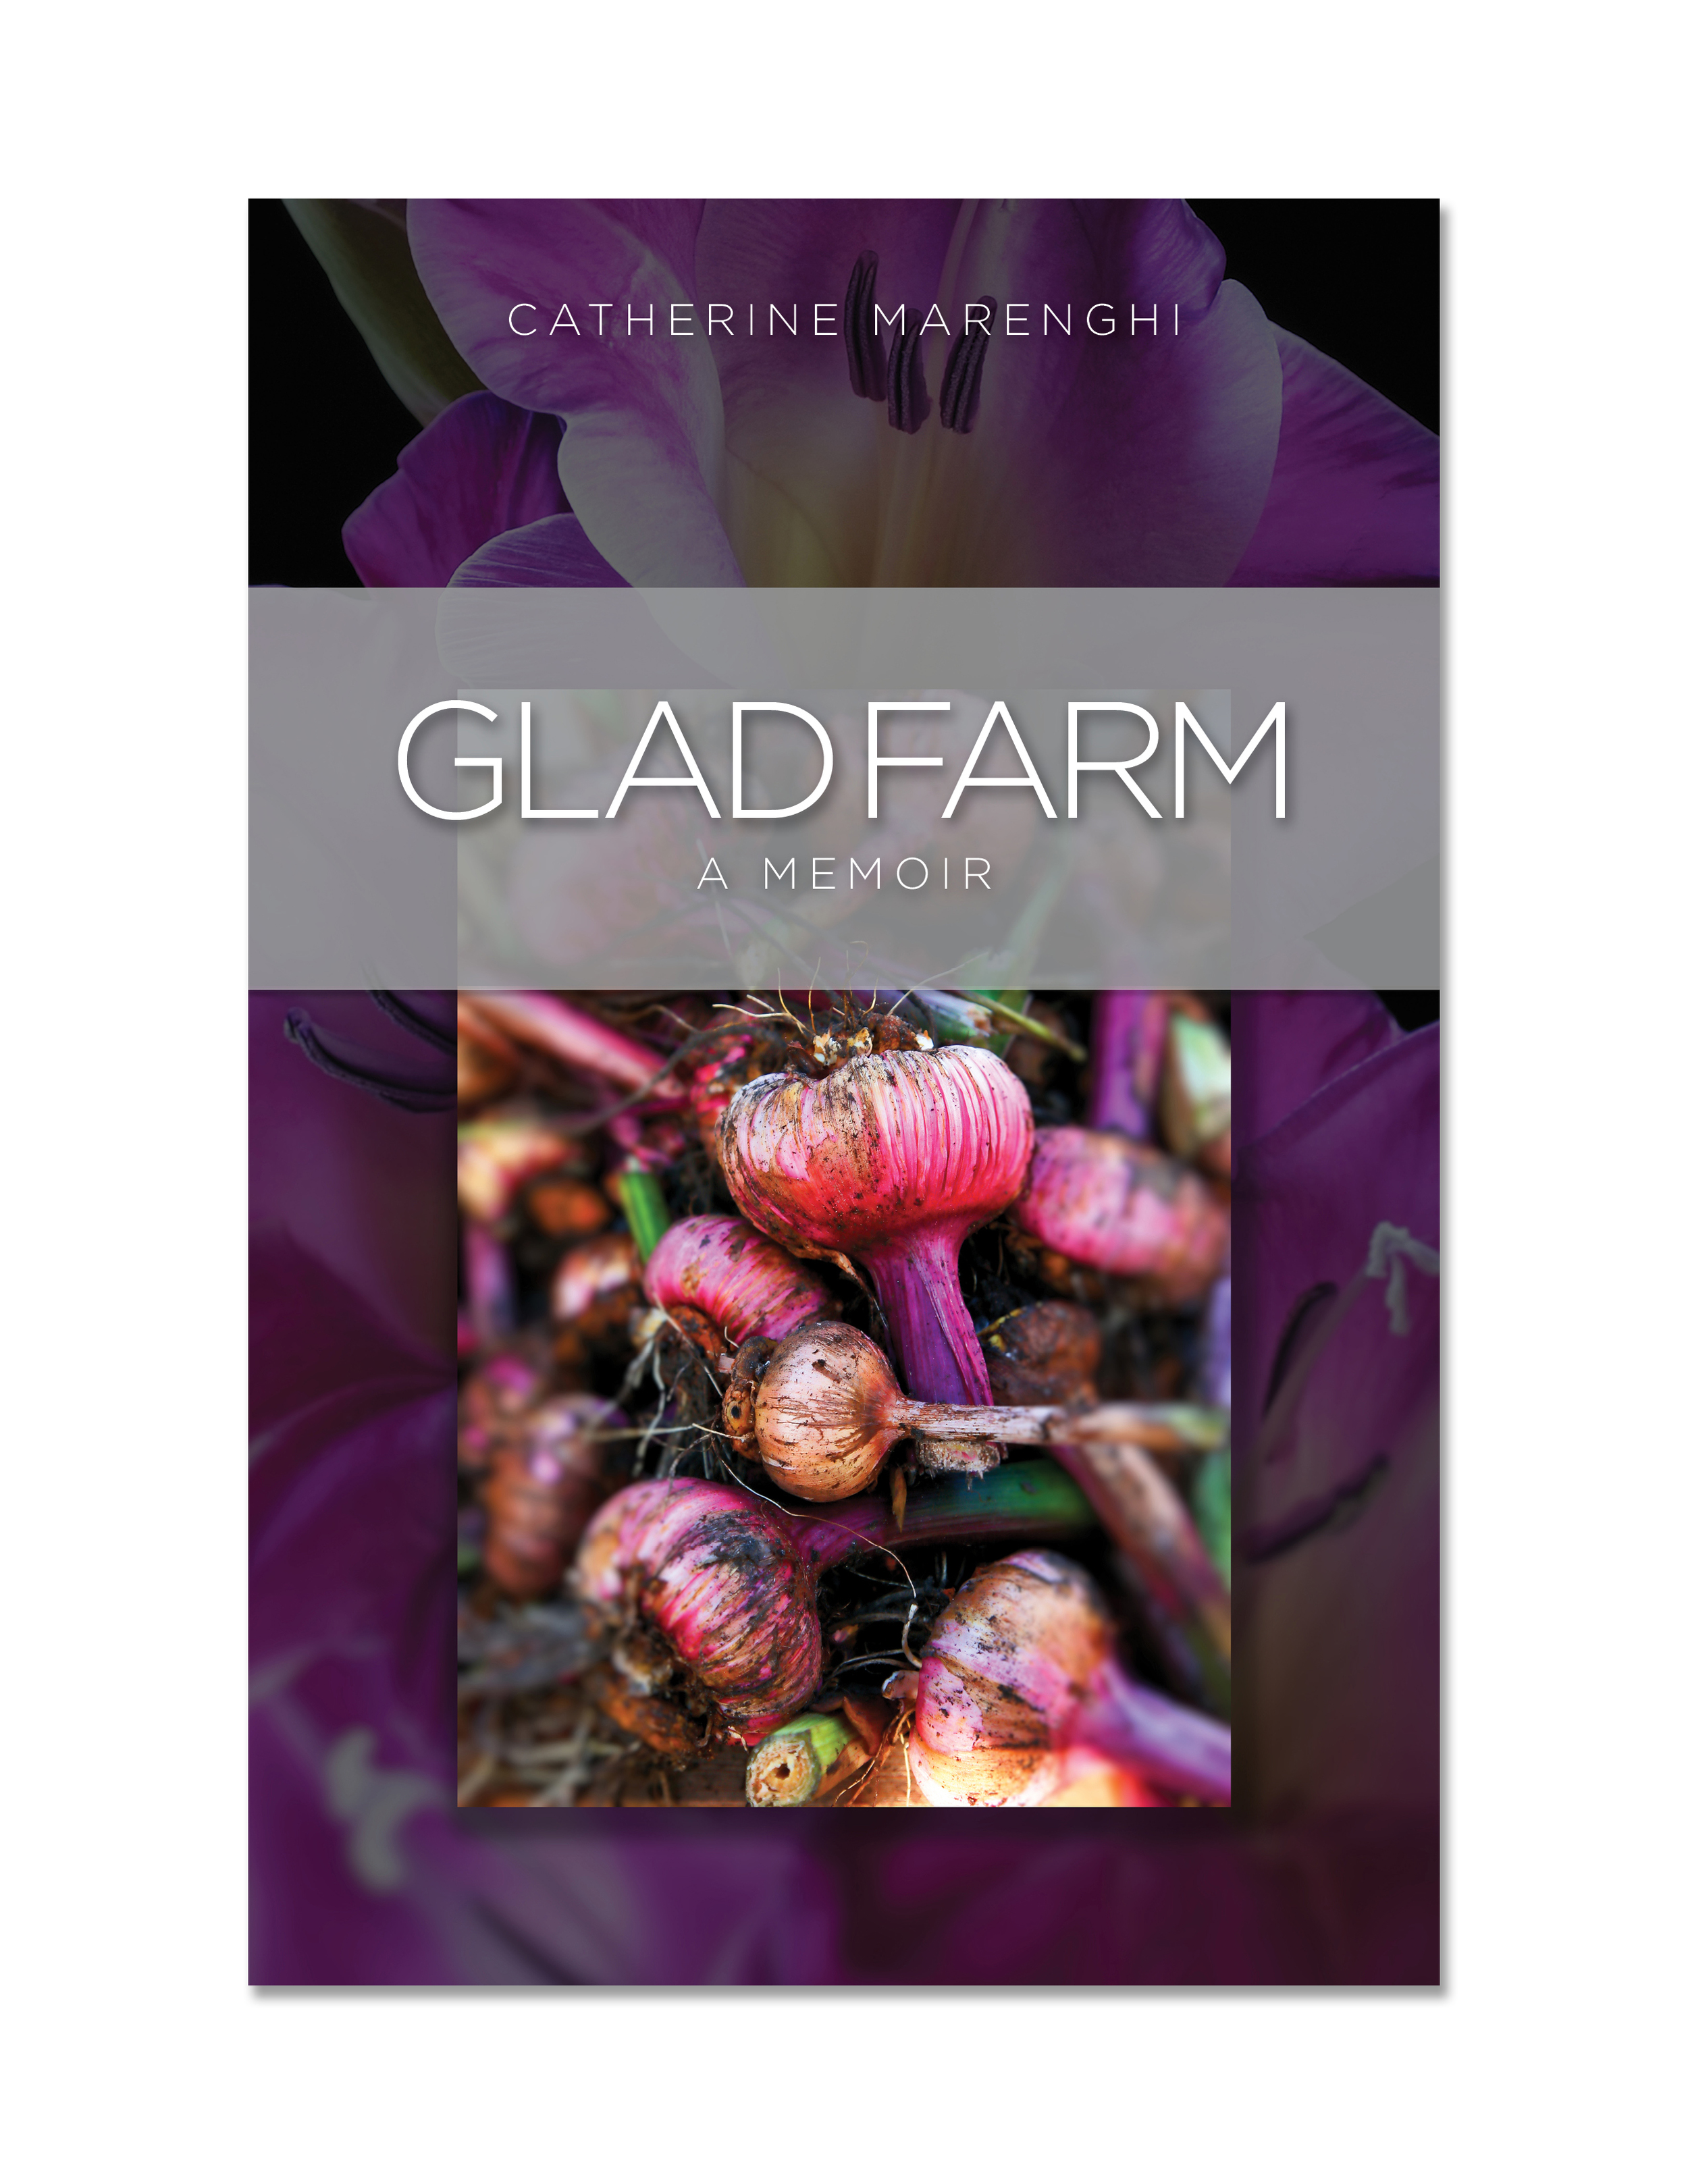 GLAD FARM: initial cover concept #4